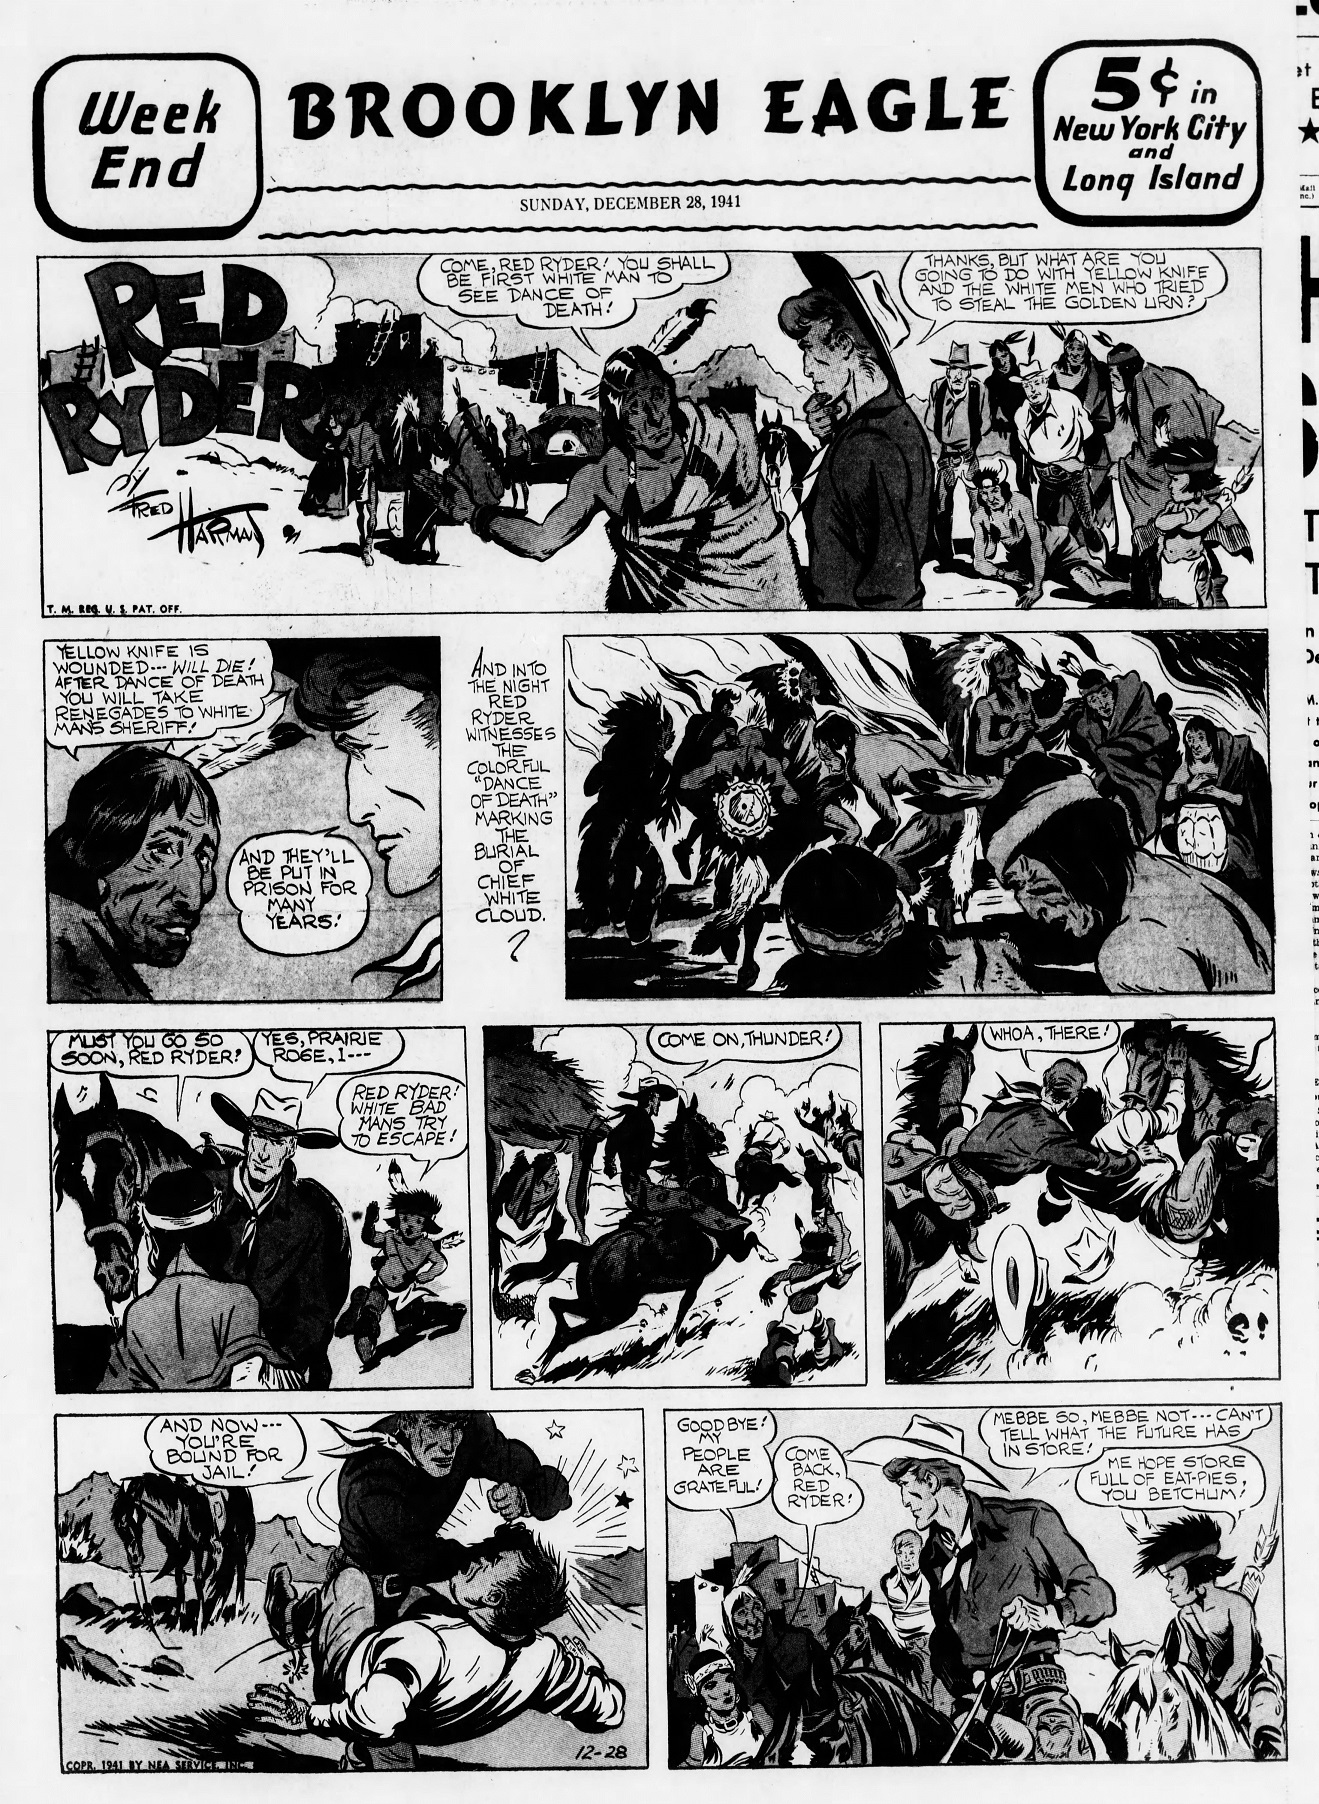 The_Brooklyn_Daily_Eagle_Sun__Dec_28__1941_(4).jpg